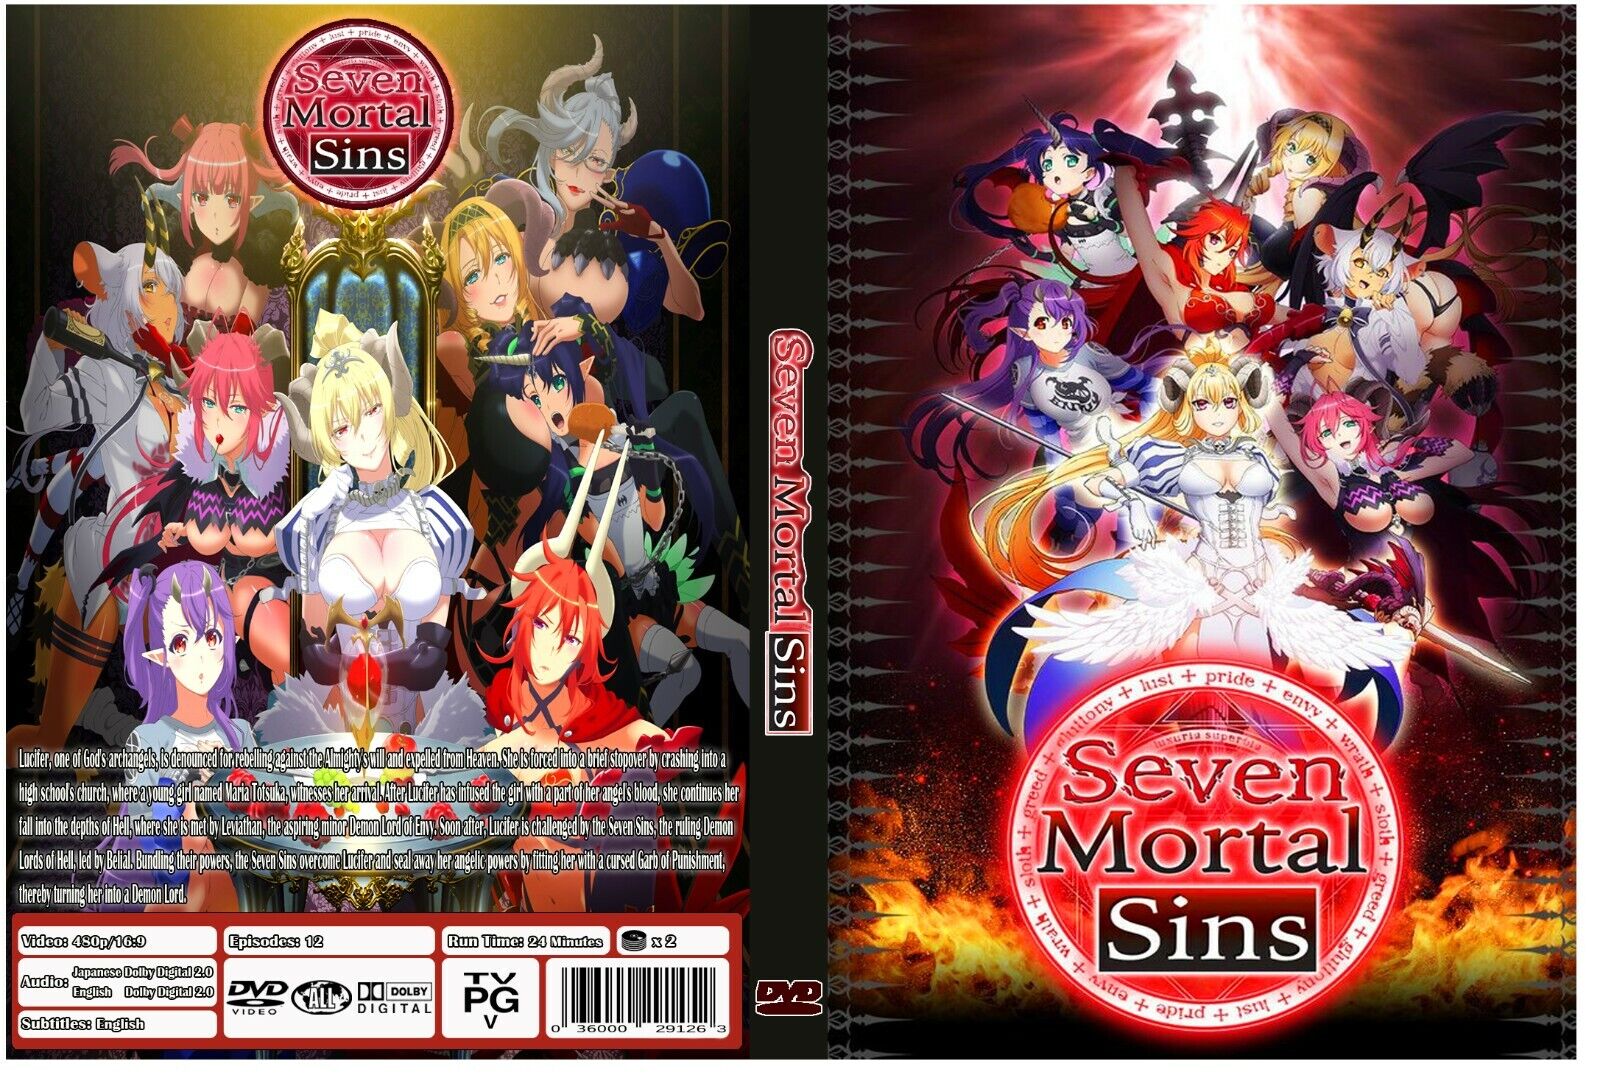 Seven mortal sins game uncensored